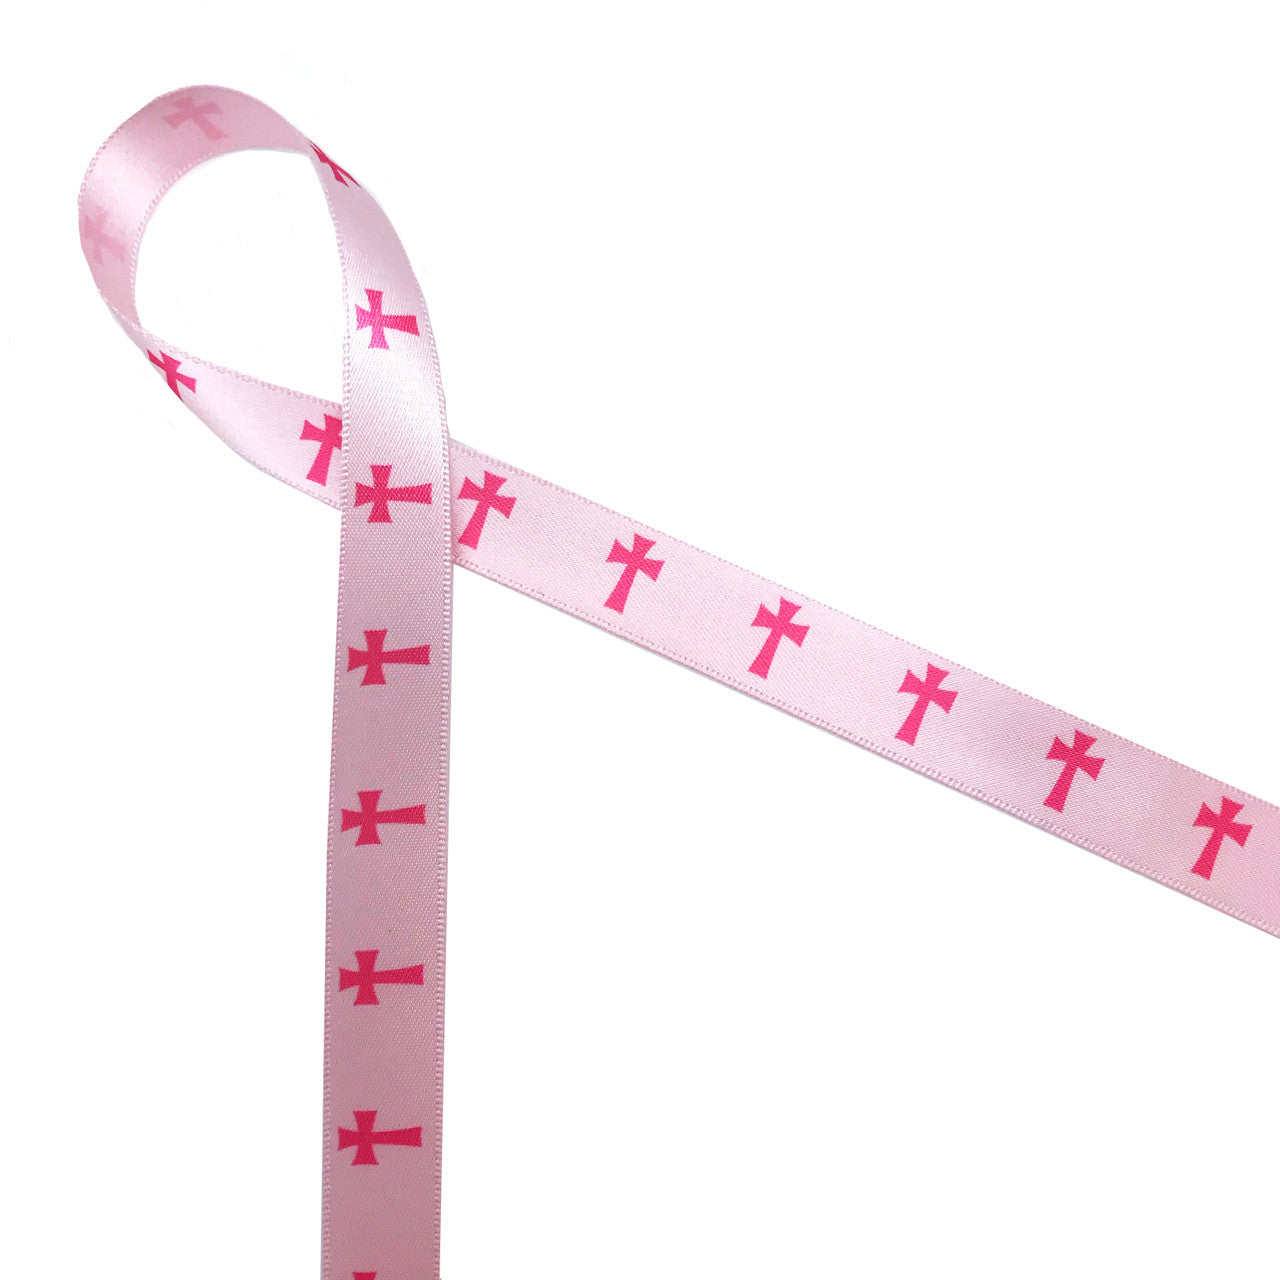 Pink Crosses  ribbon printed on 5/8" light pink single face satin